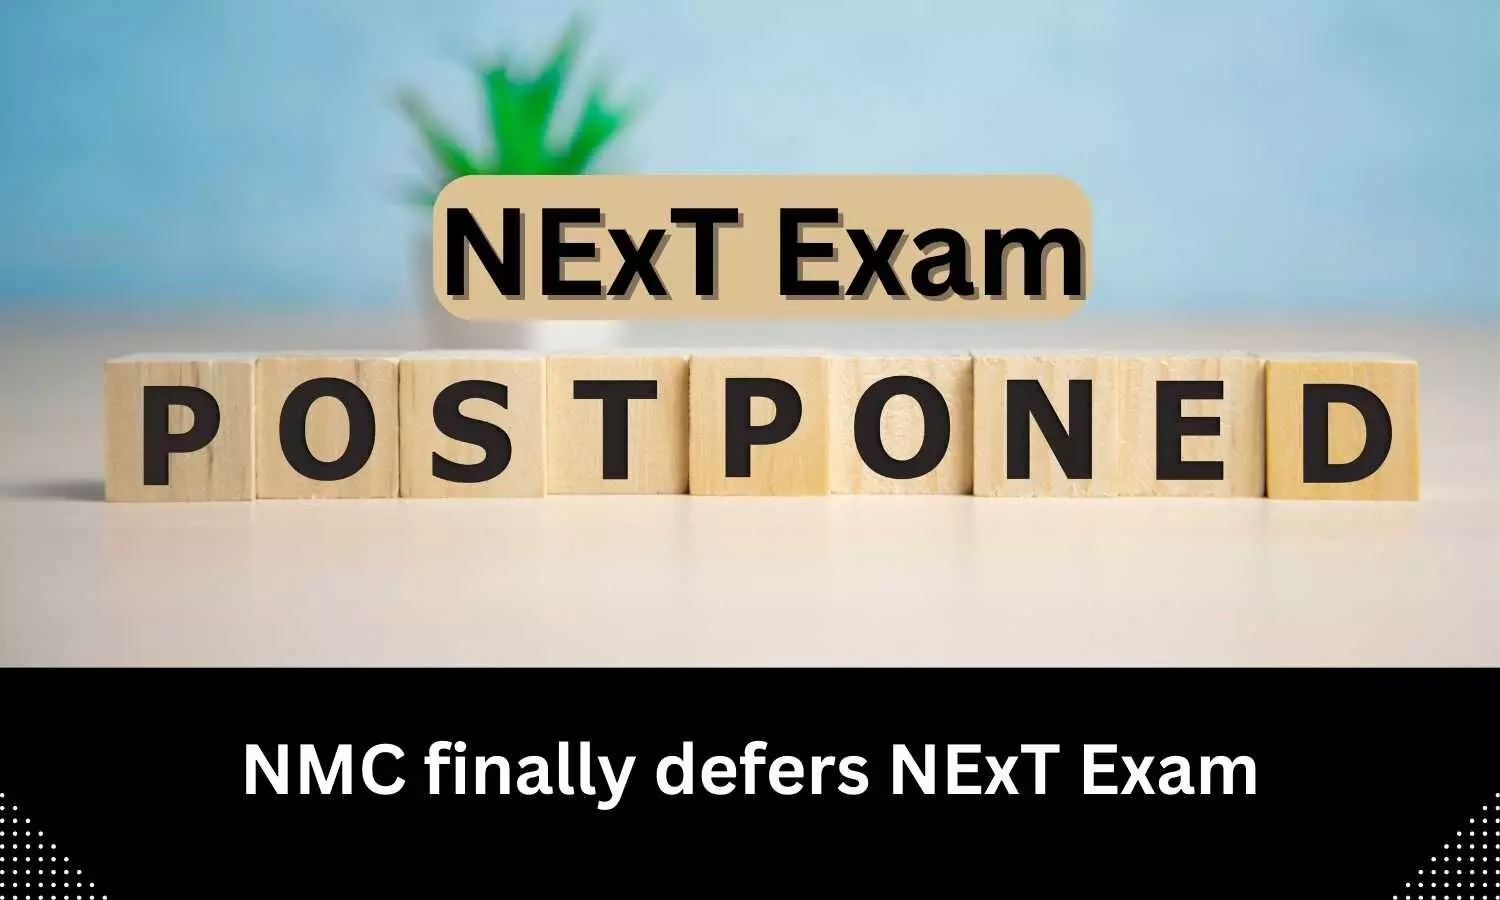 NMC defers NExT Exam